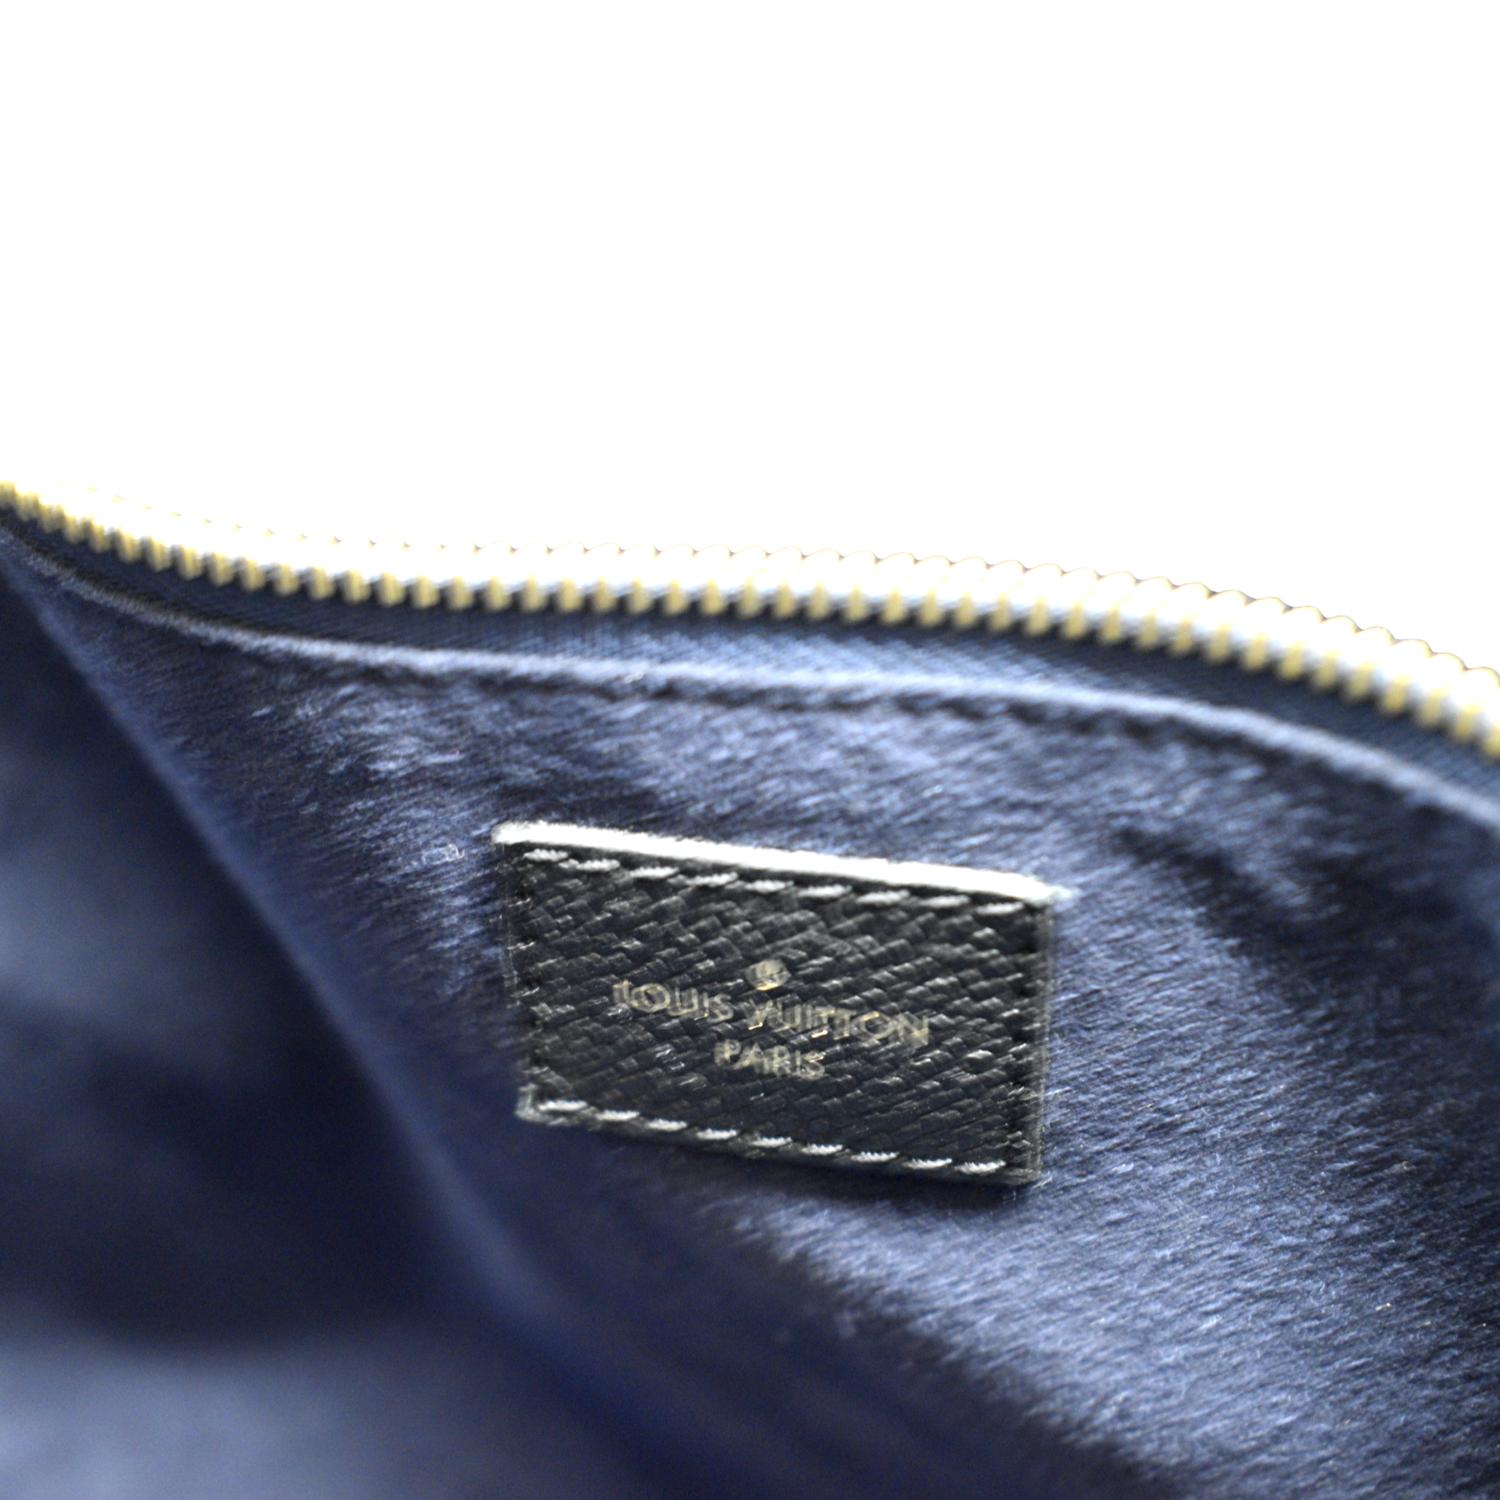 Neverfull MM Bicolor Monogram Empreinte Leather - Women - Handbags